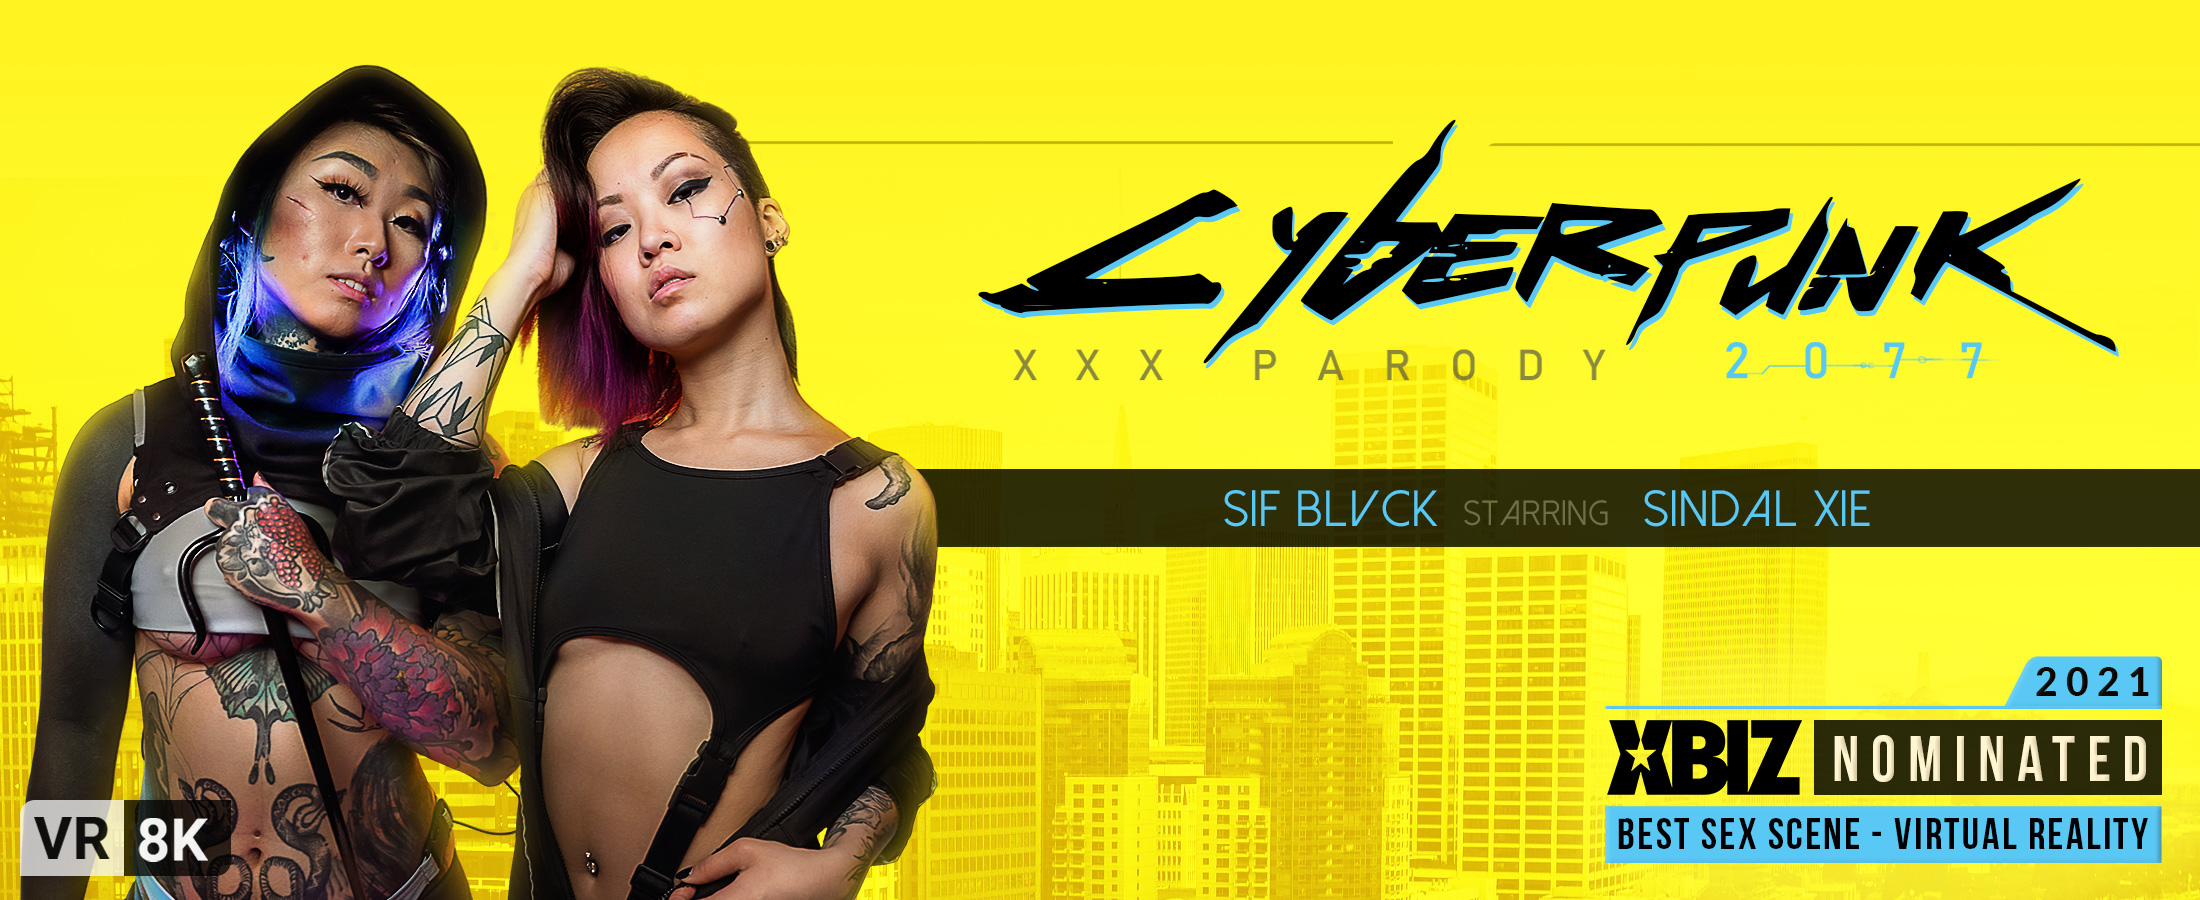 Cyberpunk 2077 XXX Parody - VR Porn Video, Starring: Sif Blvck, Sindal Xie